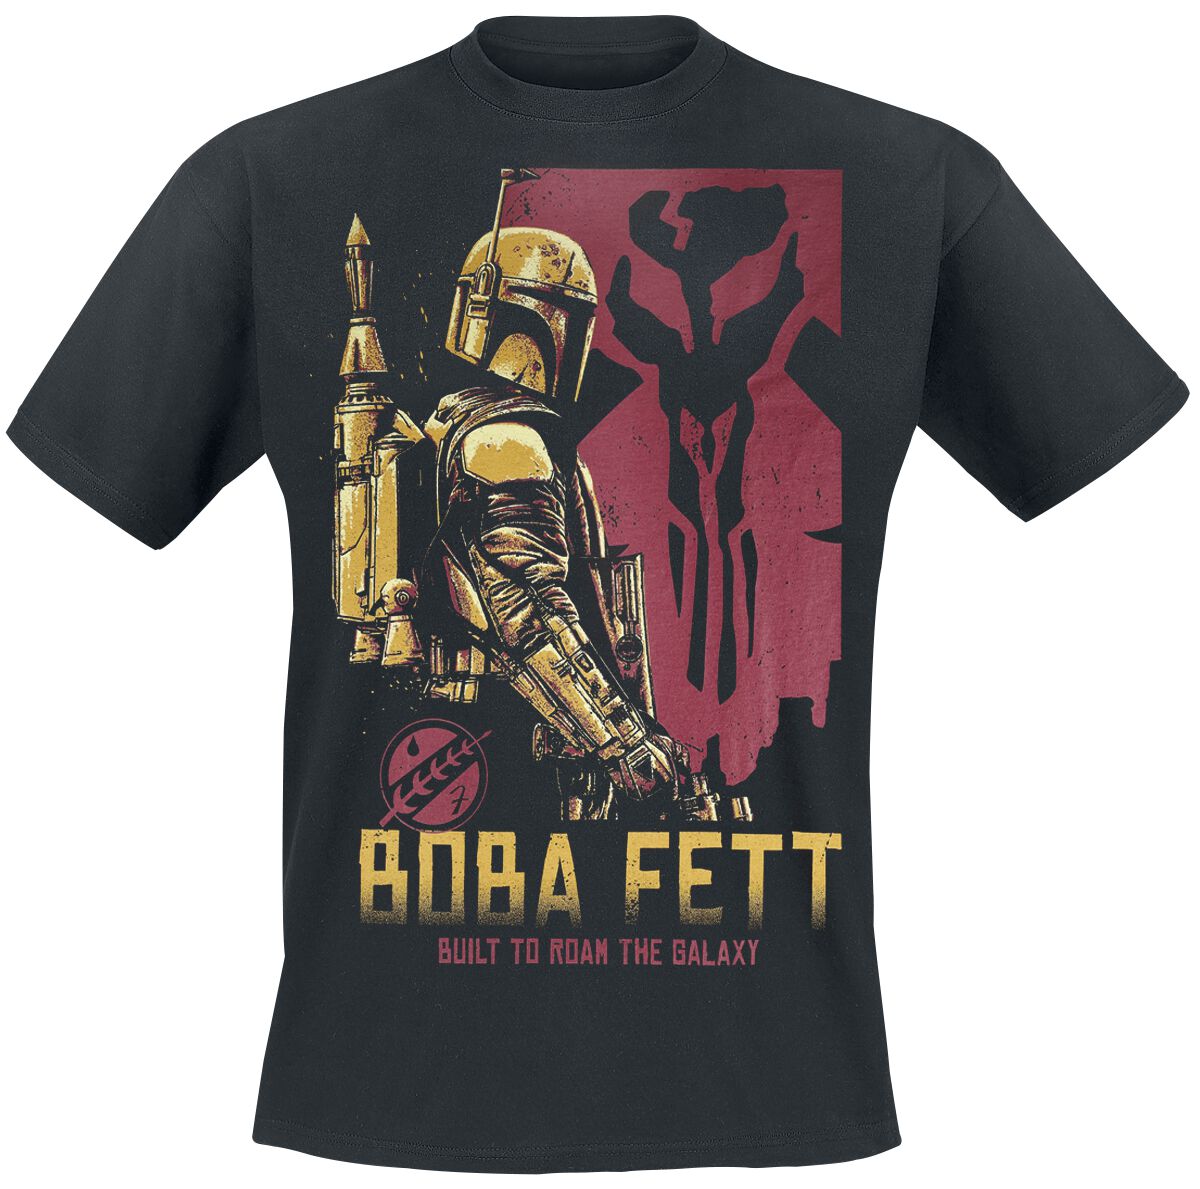 Star Wars The Book Of Boba Fett - Roam The Galaxy T-Shirt schwarz in M